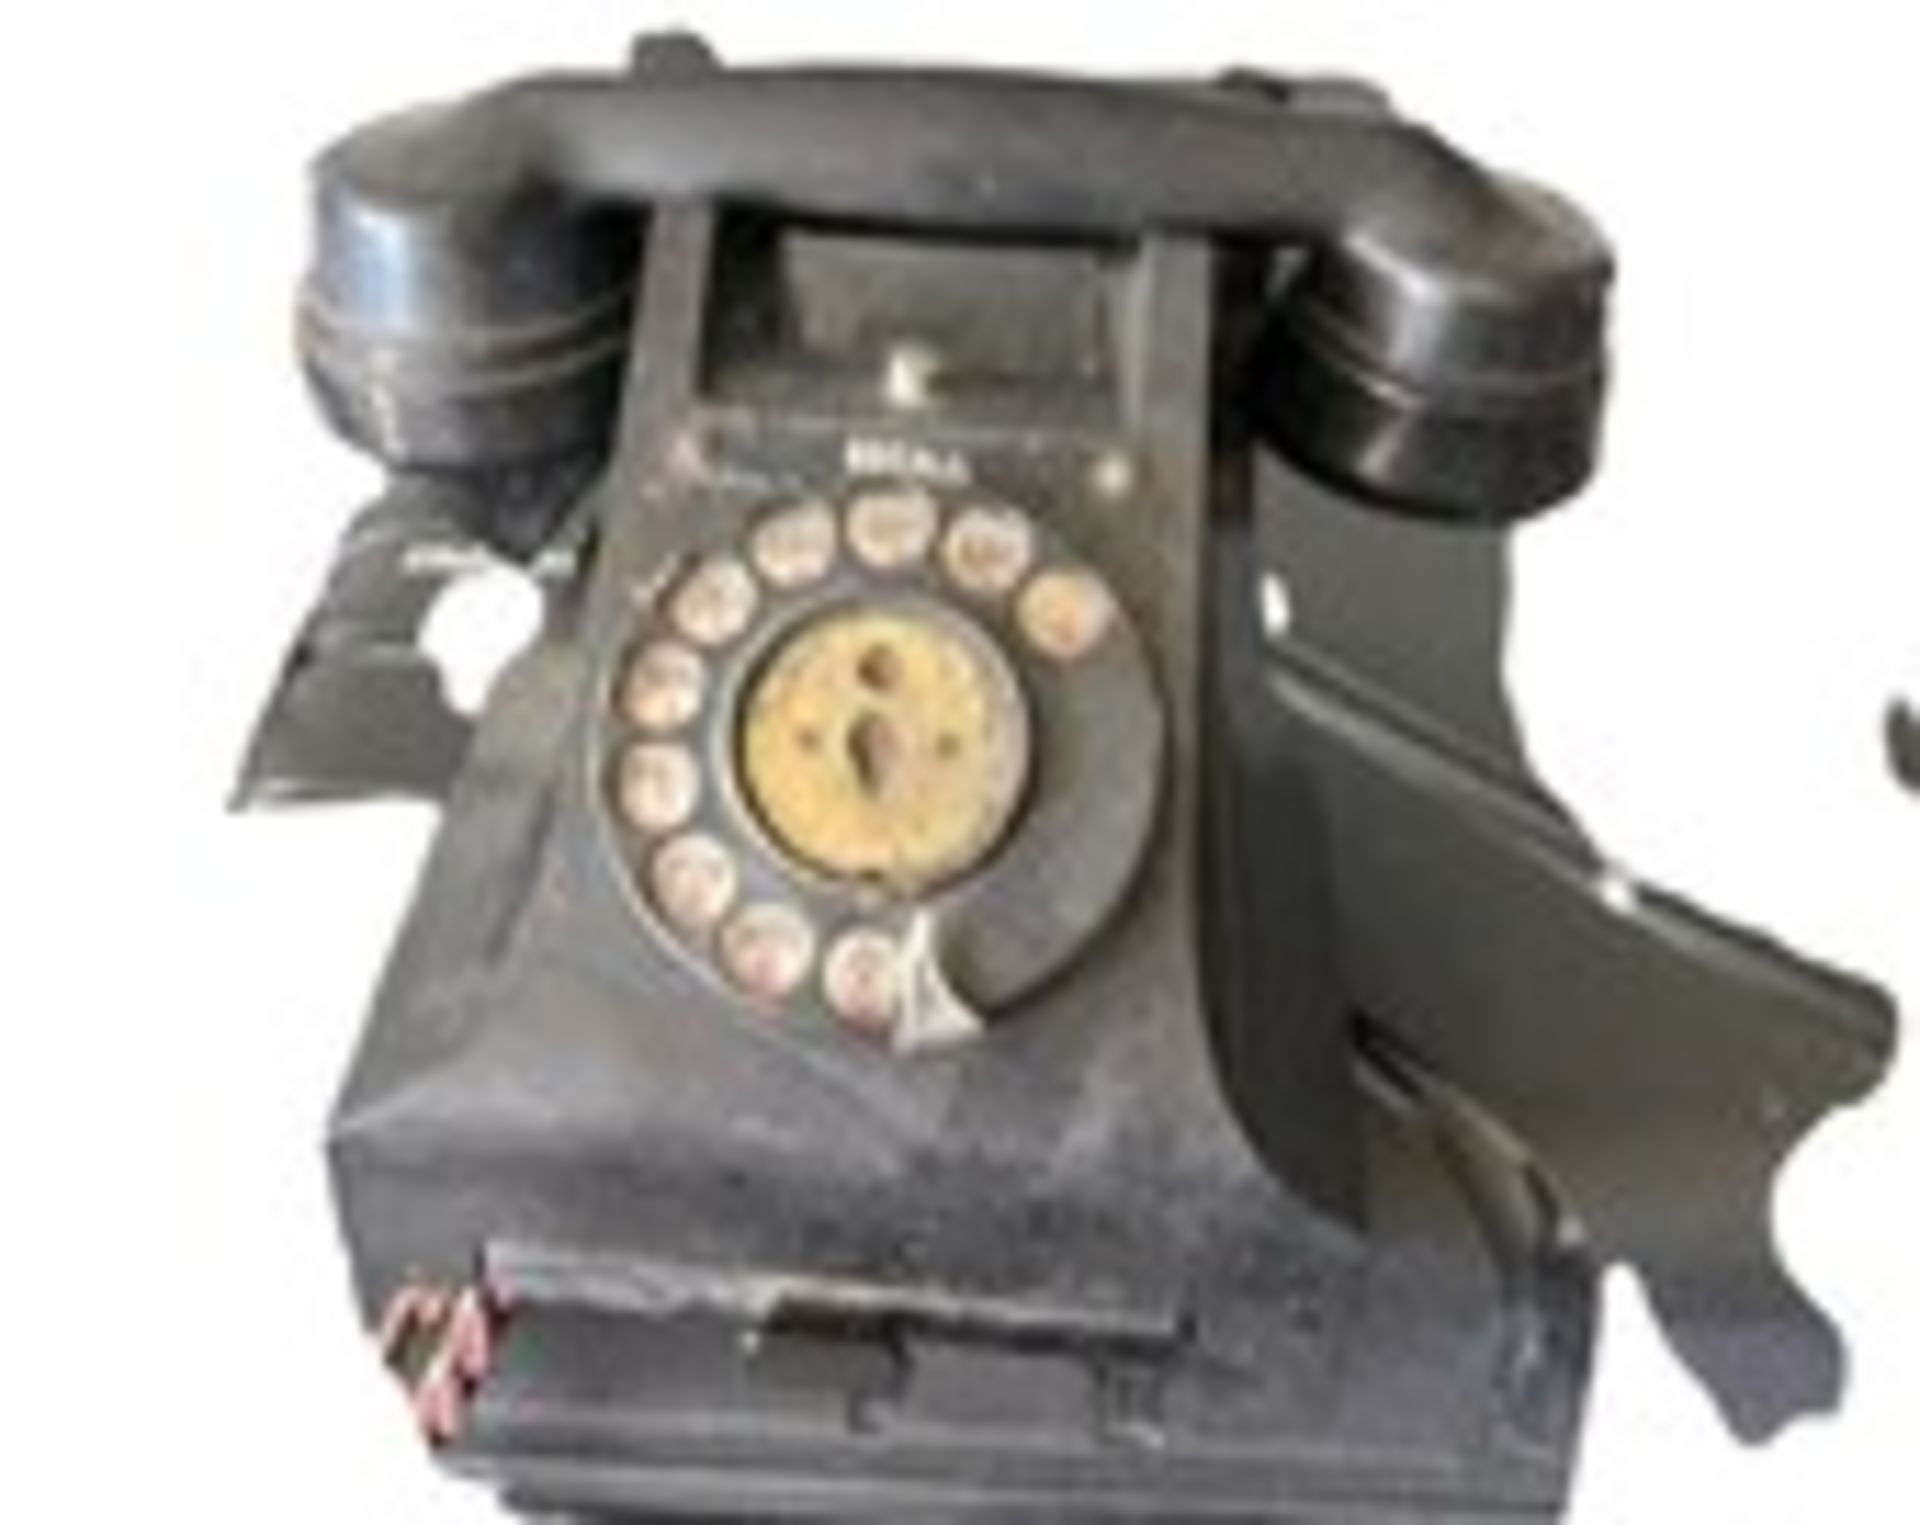 1956 GPO bakelite matt black dial telephone - Image 2 of 2